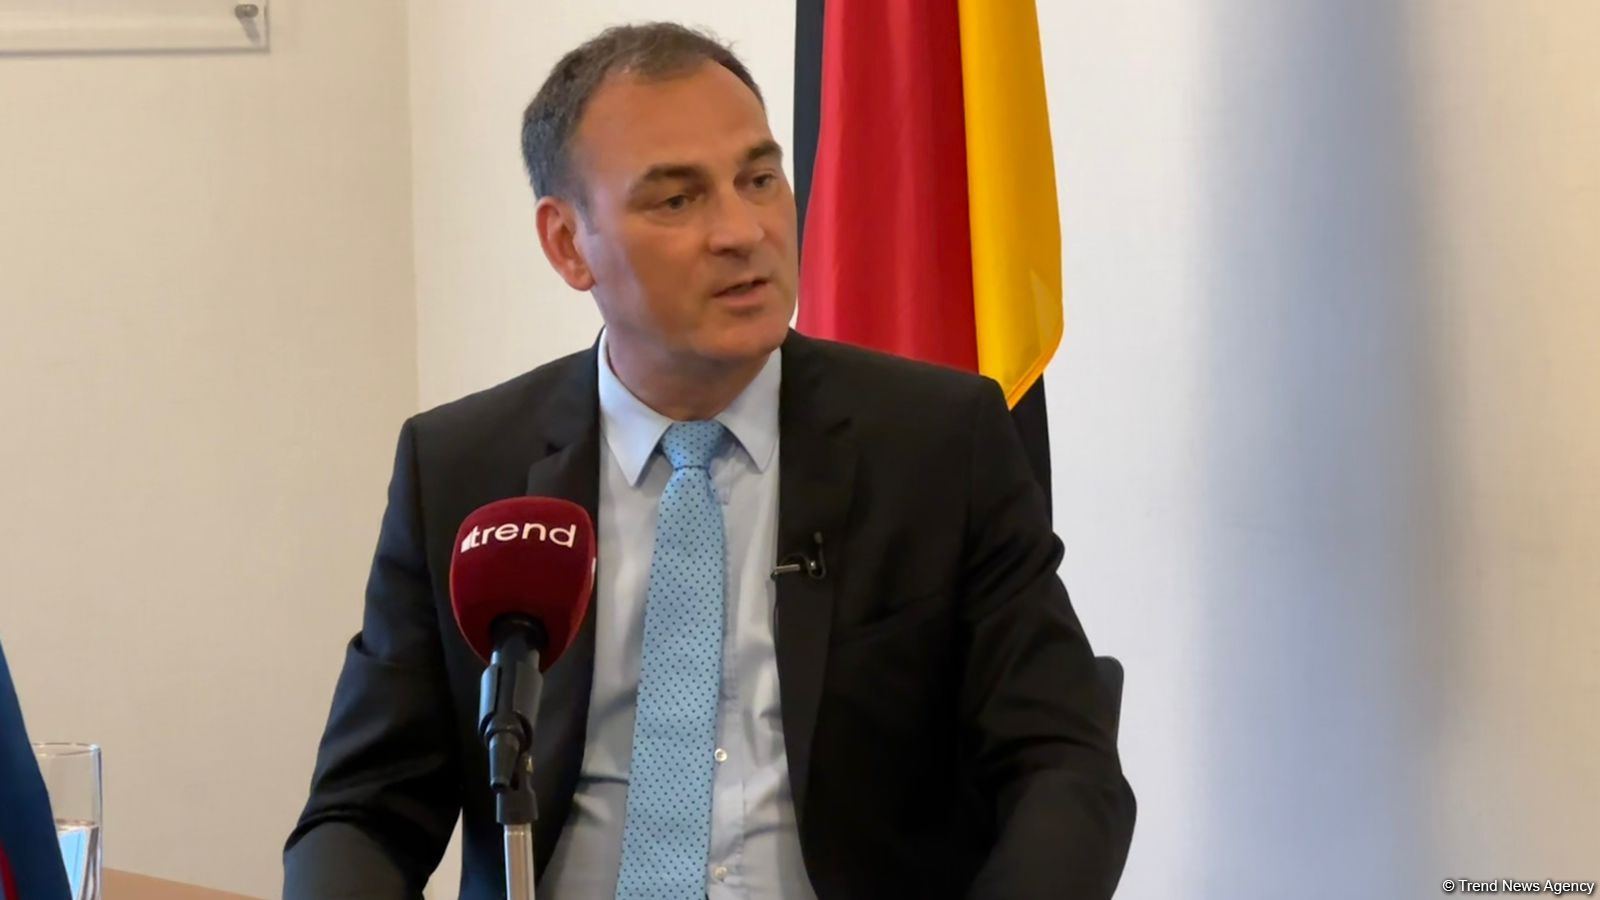 Germany plans to boost exports to Azerbaijan, AHK executive says